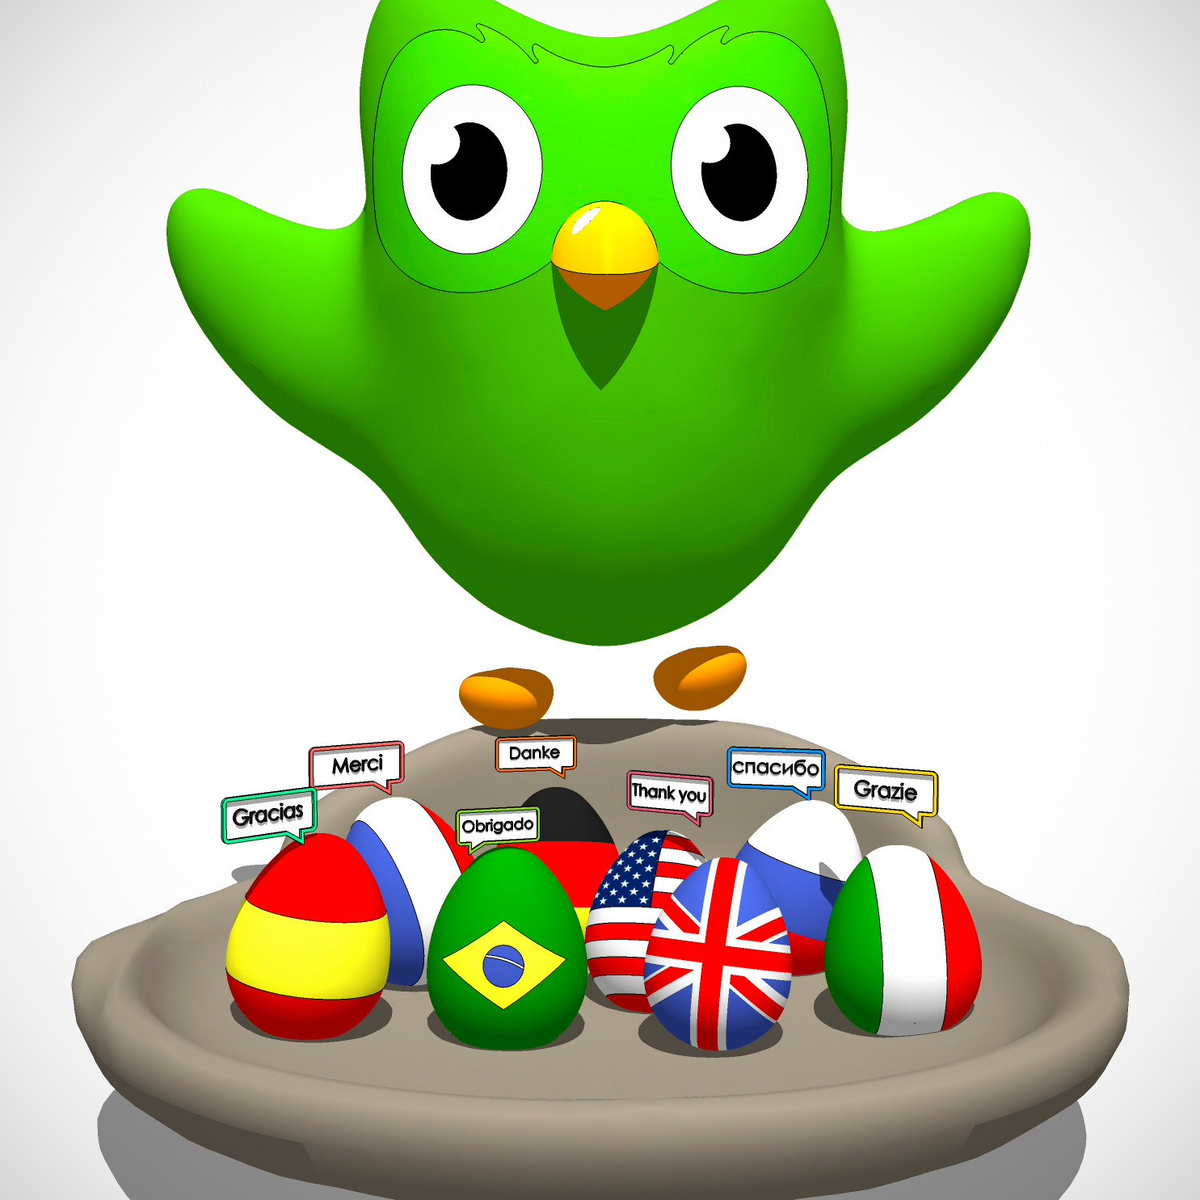 Duolingo. Duolingo Duo. Duolingo приложение. Значок Дуолинго. Https duolingo com